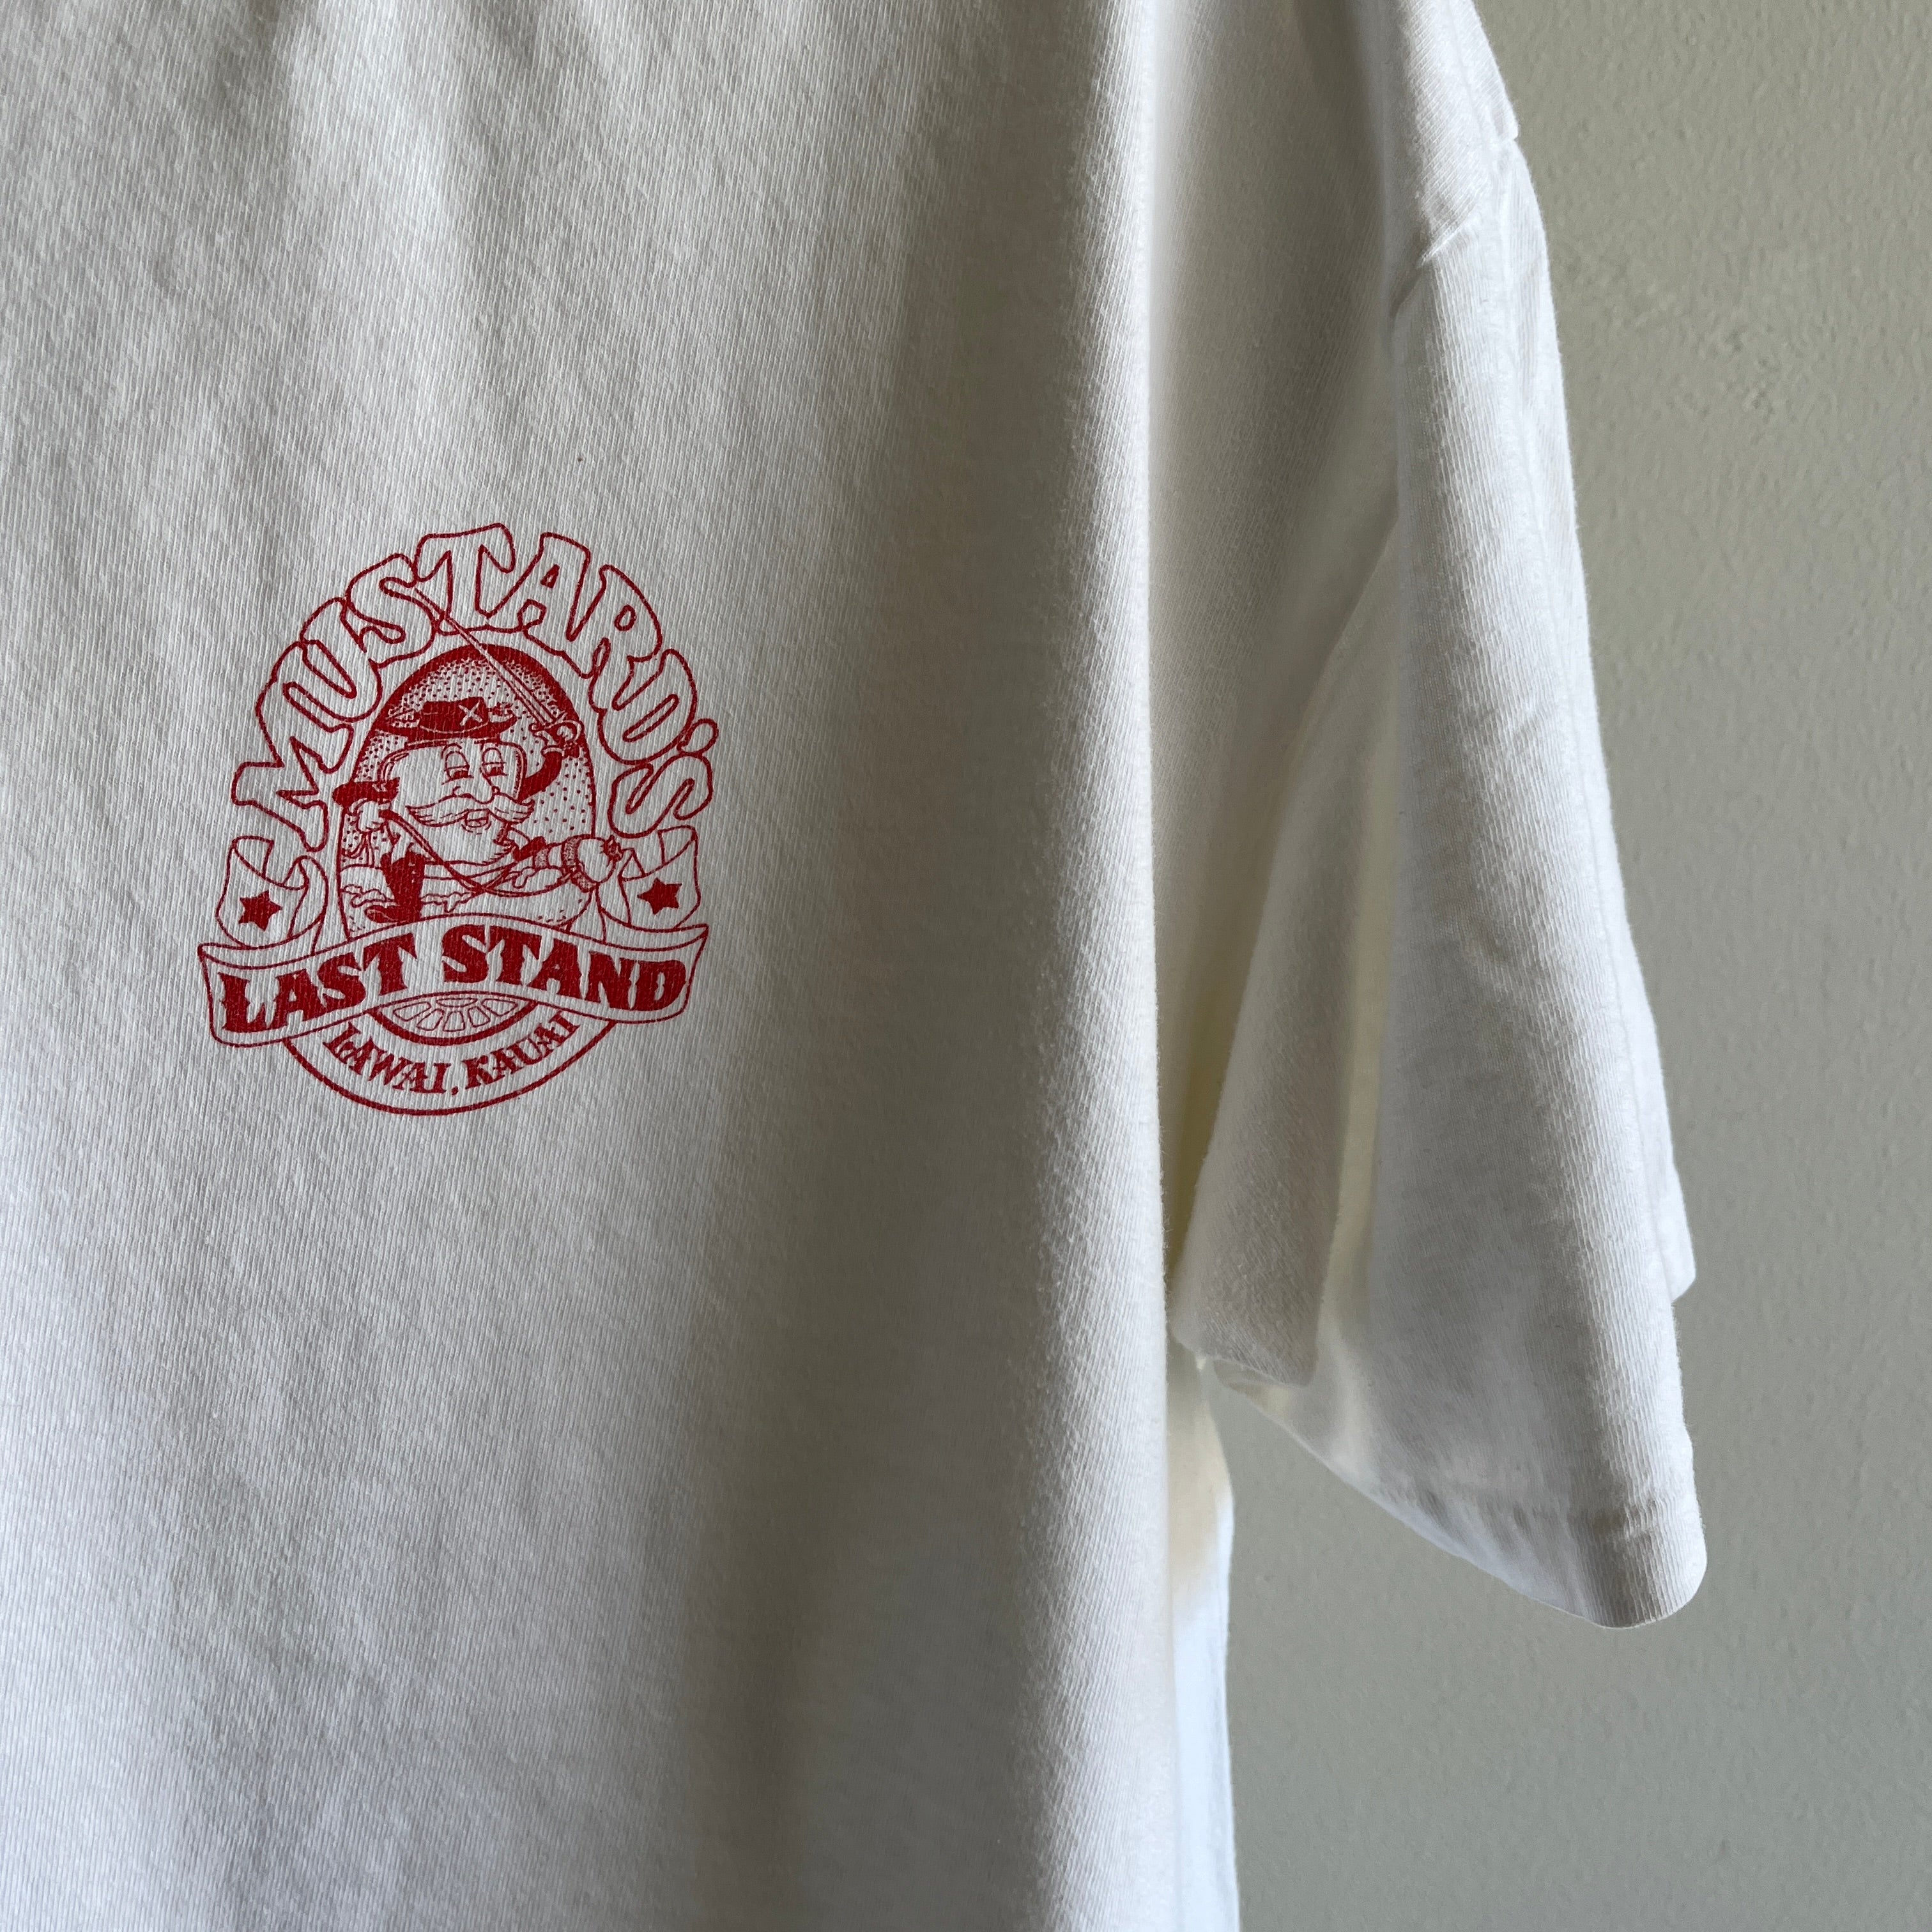 1990s Mustard's Last Stand - Hot Dog Stand - Kauai, Hawaii T-Shirt